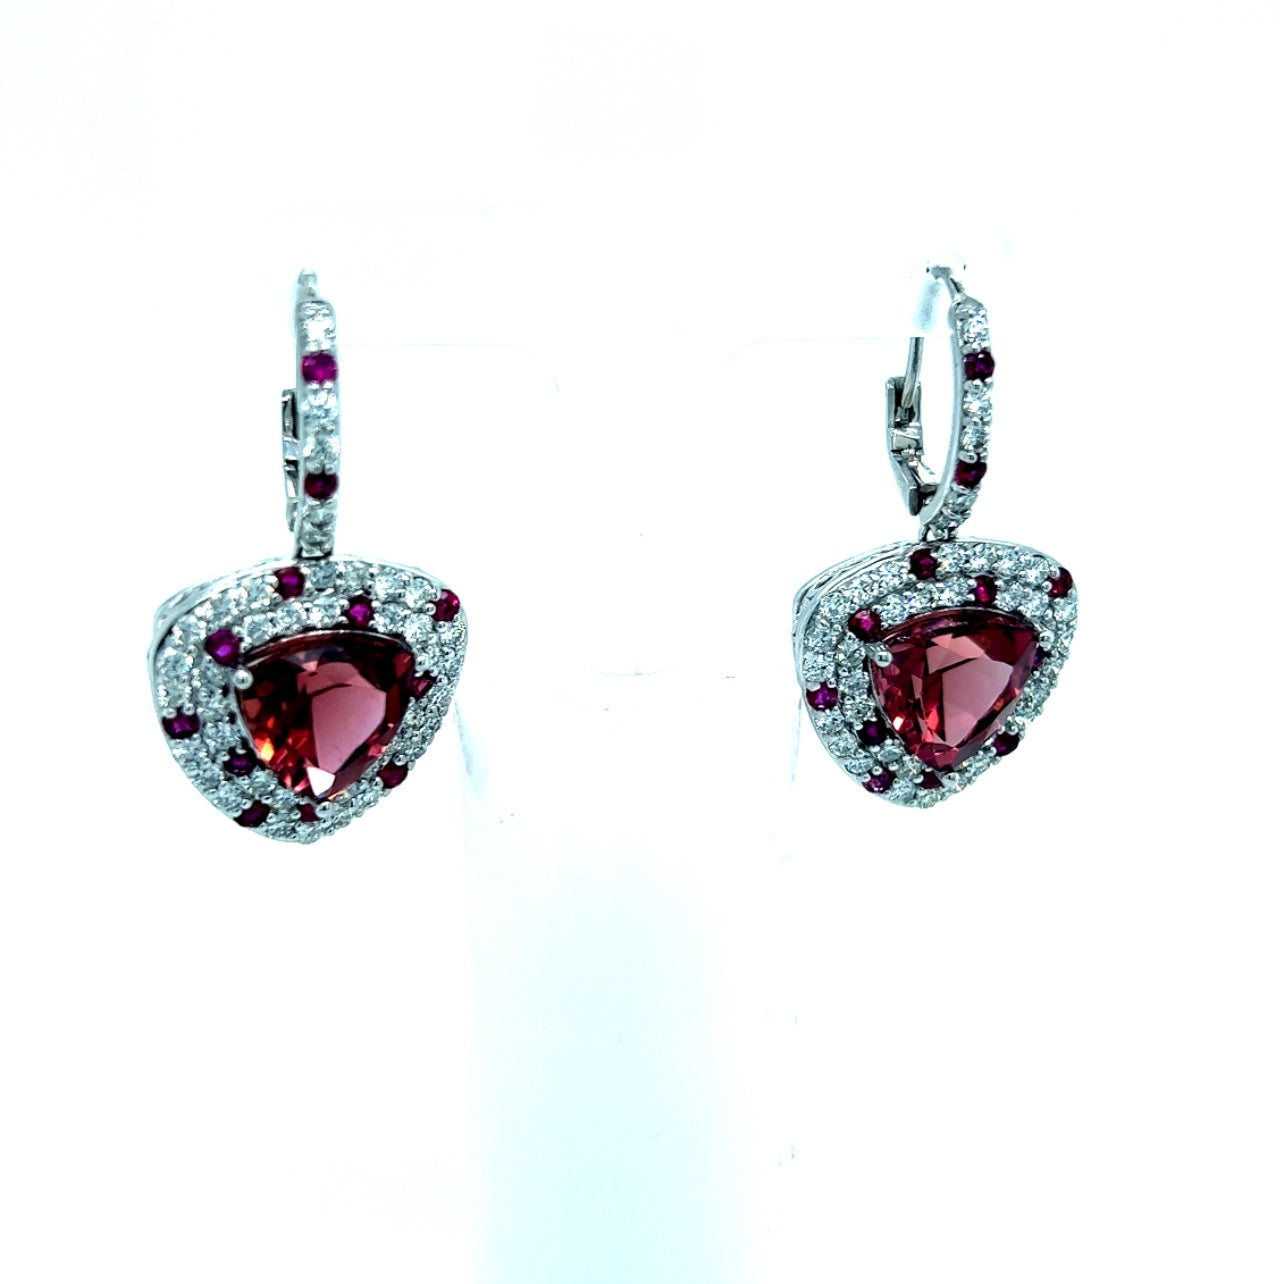 Natural Tourmaline Ruby Diamond Dangle Earrings 14k White Gold 10.53 TCW Certified $7,975 301437